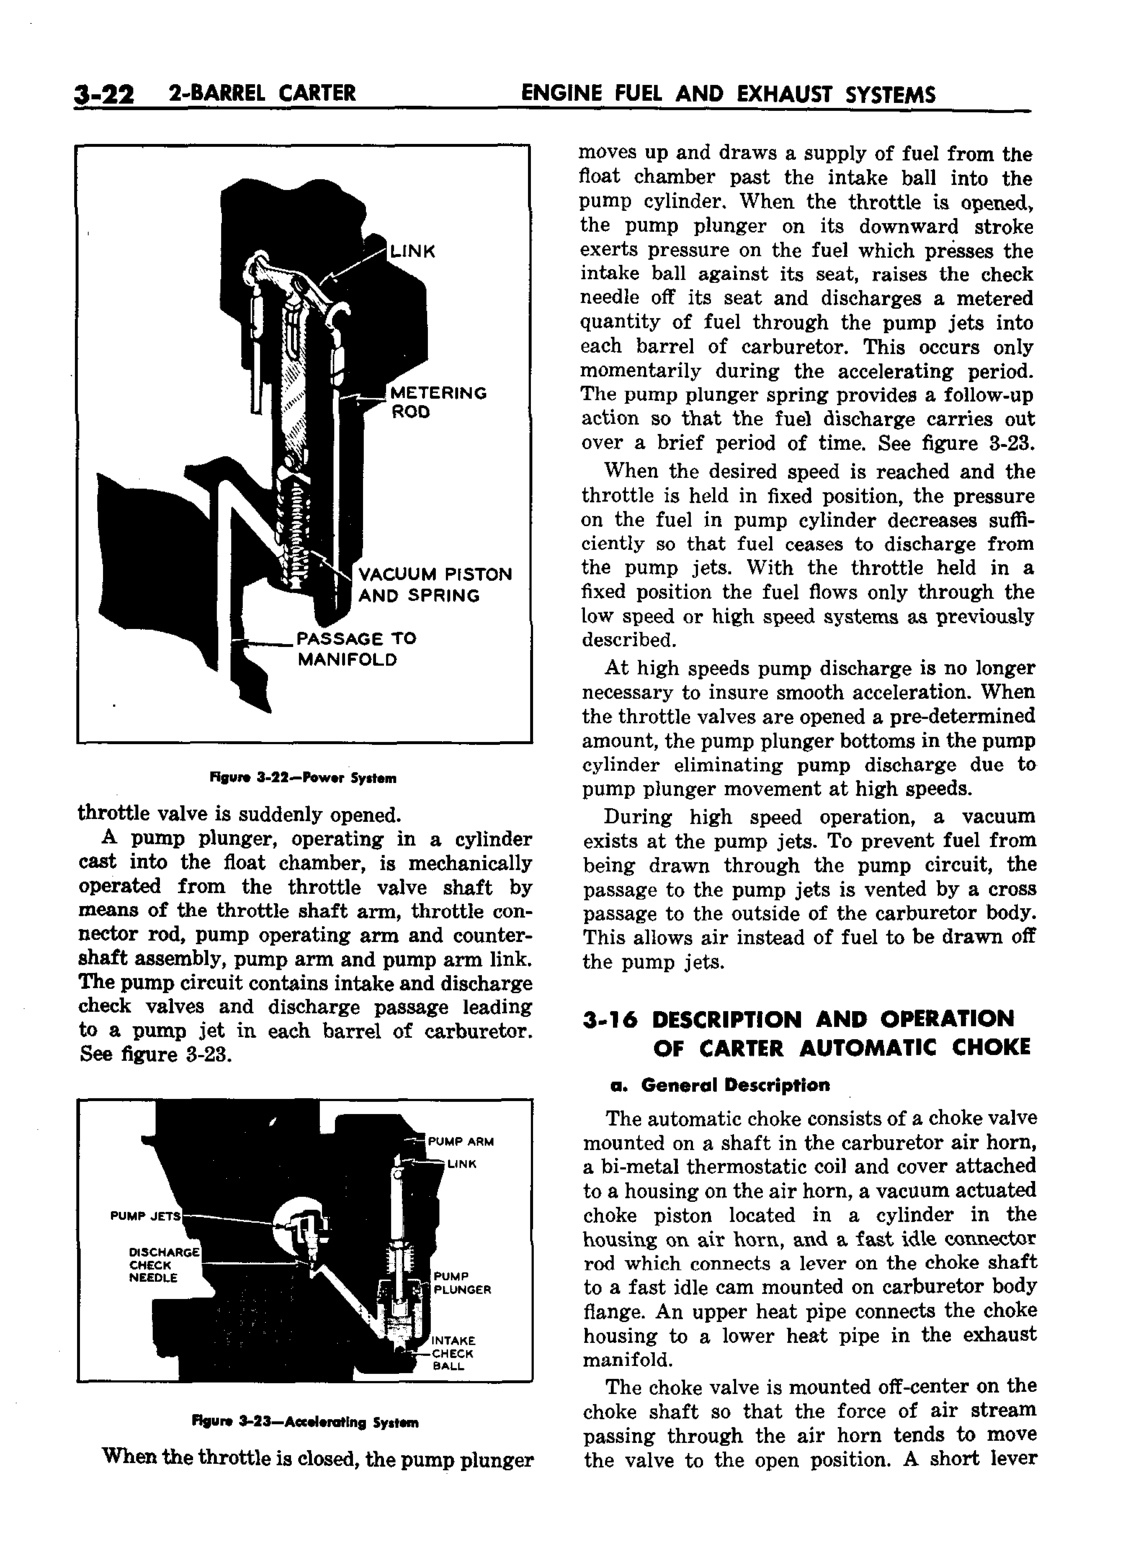 n_04 1959 Buick Shop Manual - Engine Fuel & Exhaust-022-022.jpg